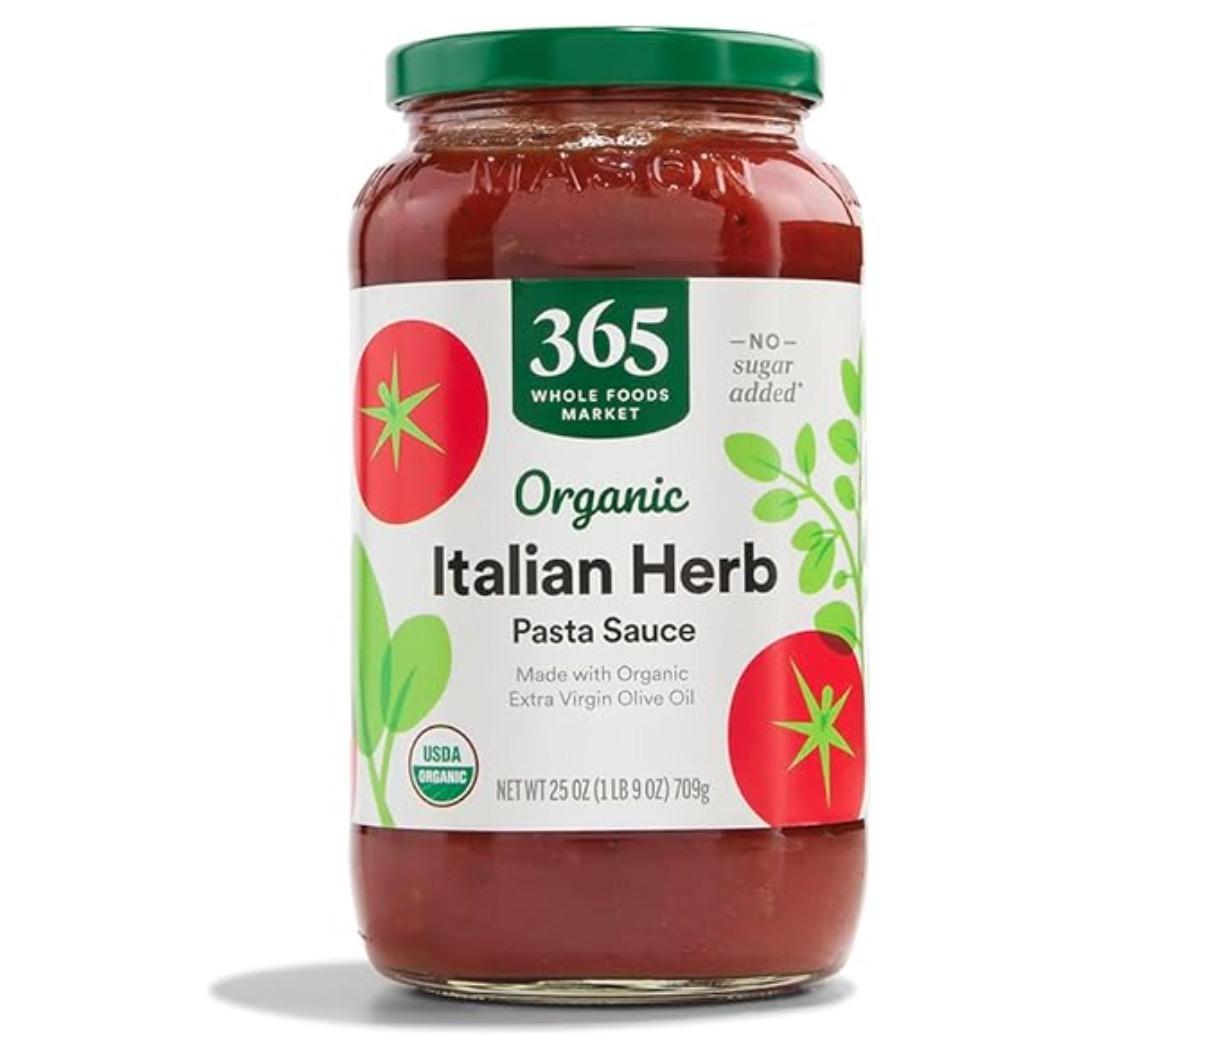 365 Organic Italian Herb Pasta Sauce for $1.96